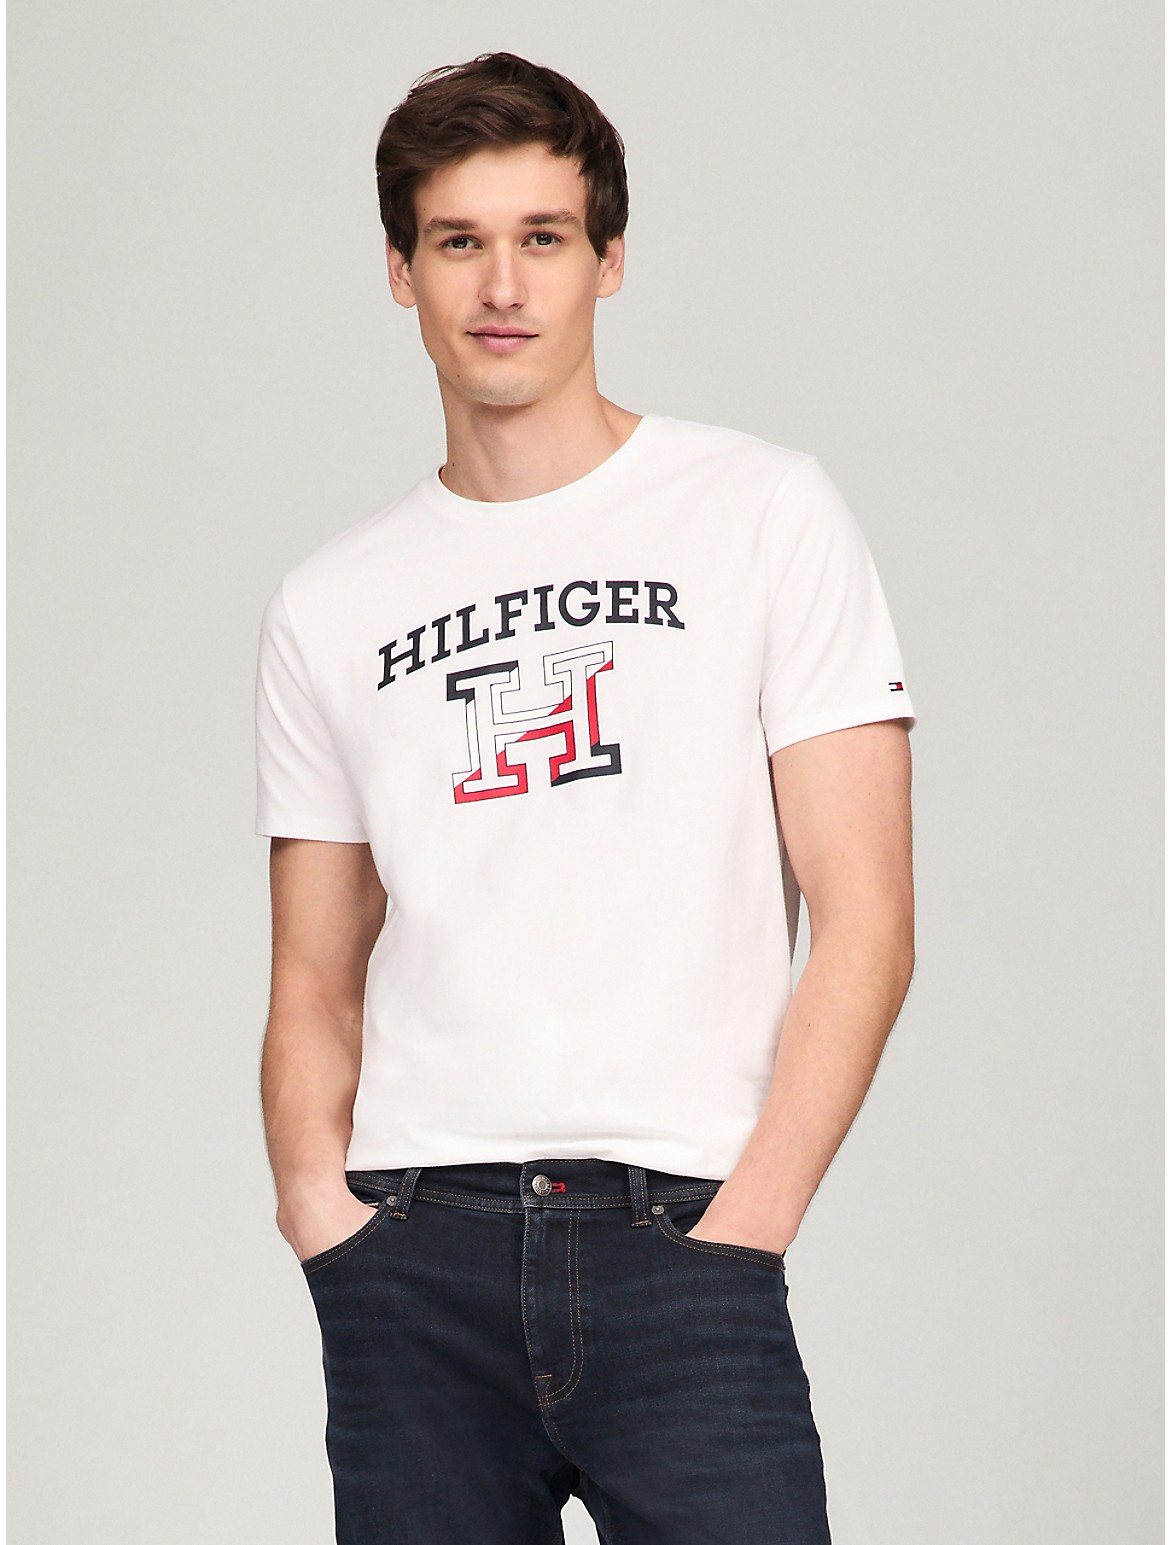 Tommy Hilfiger Men's Hilfiger Graphic T-Shirt